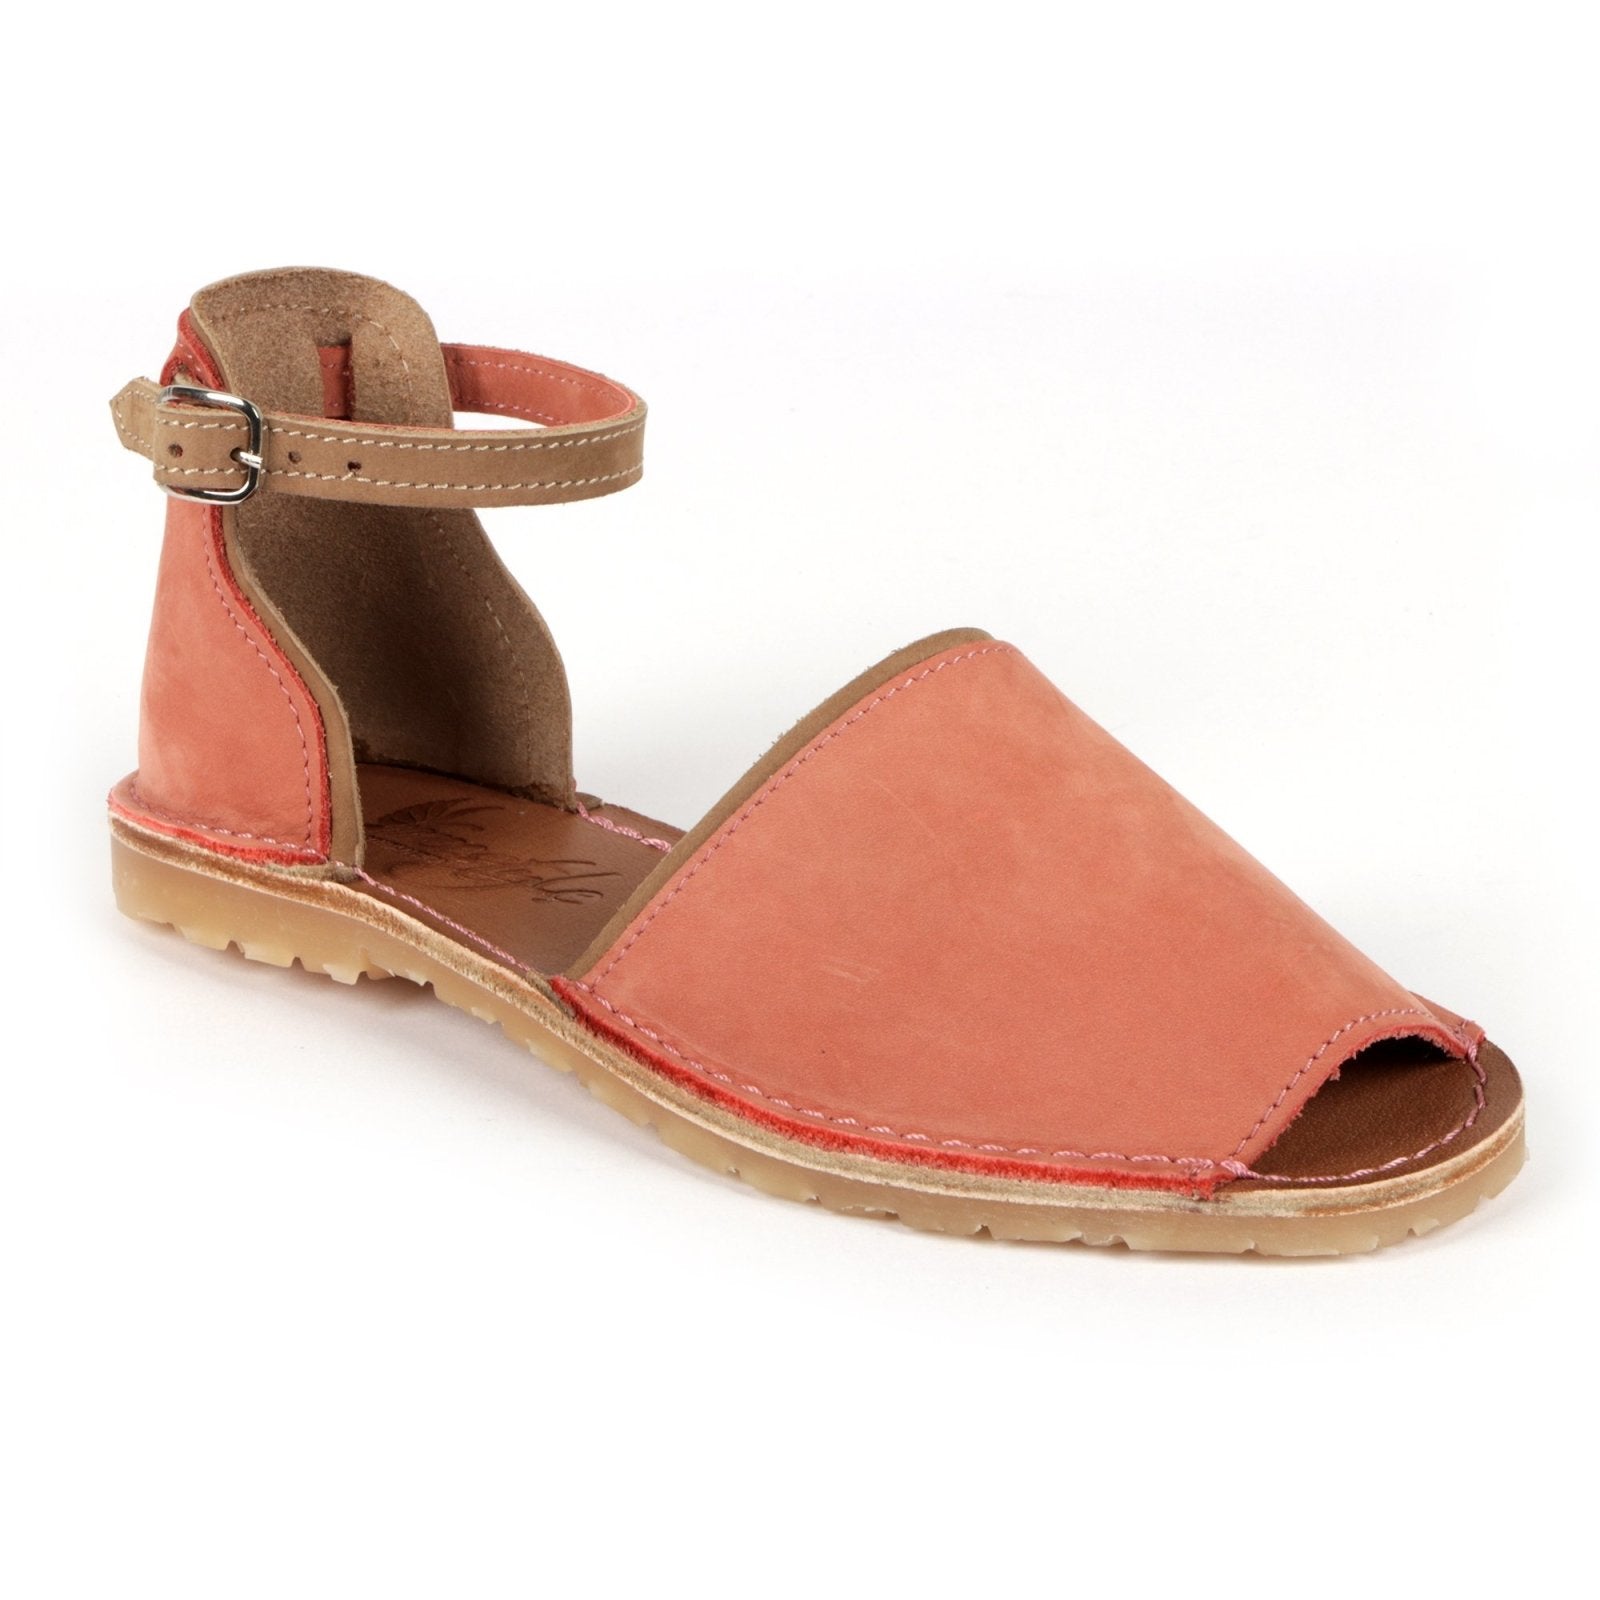 Rivera Alpargata-styled Premium nubuck leather ladies sandal - Freestyle SA Proudly local leather boots veldskoens vellies leather shoes suede veldskoens